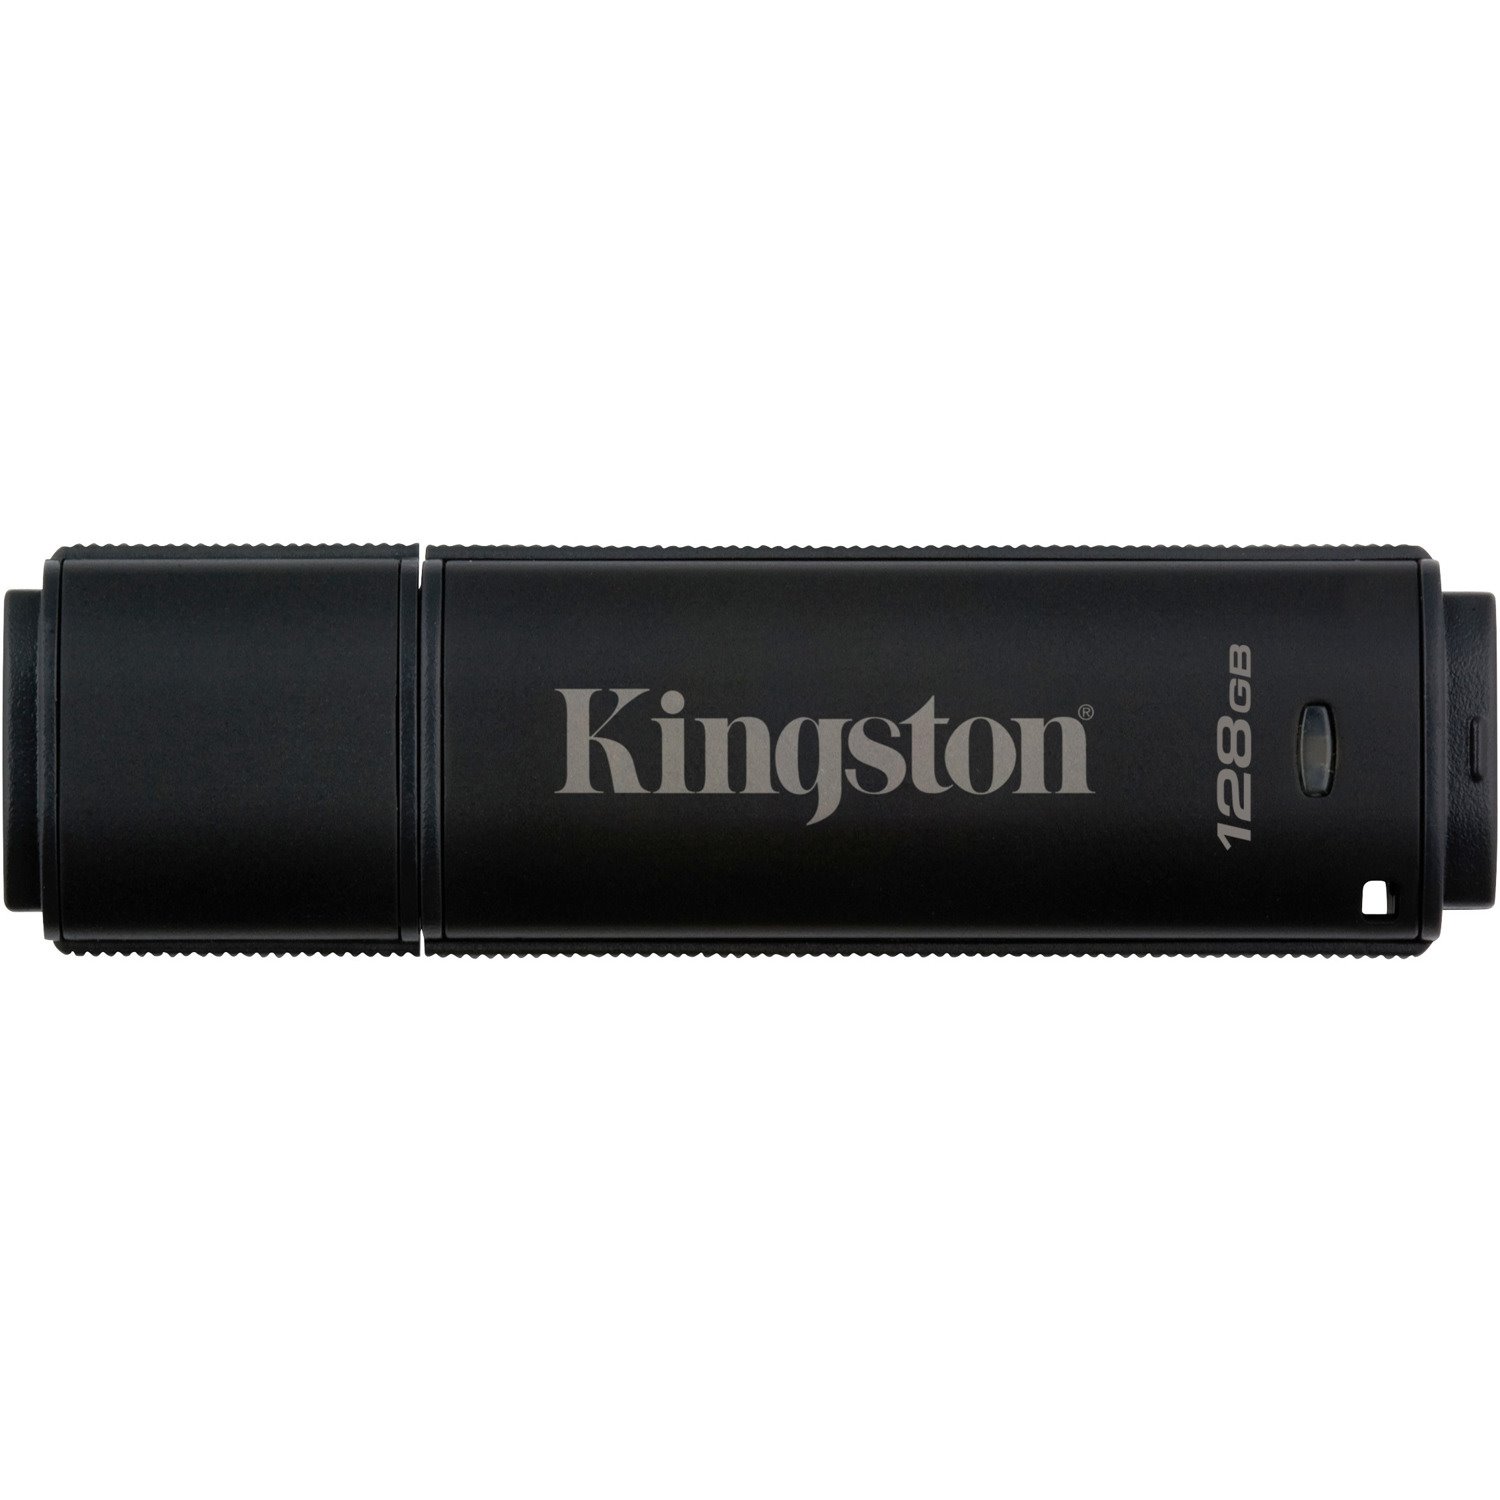 Kingston DT4000G2 ENCRYPTED USB FLASH